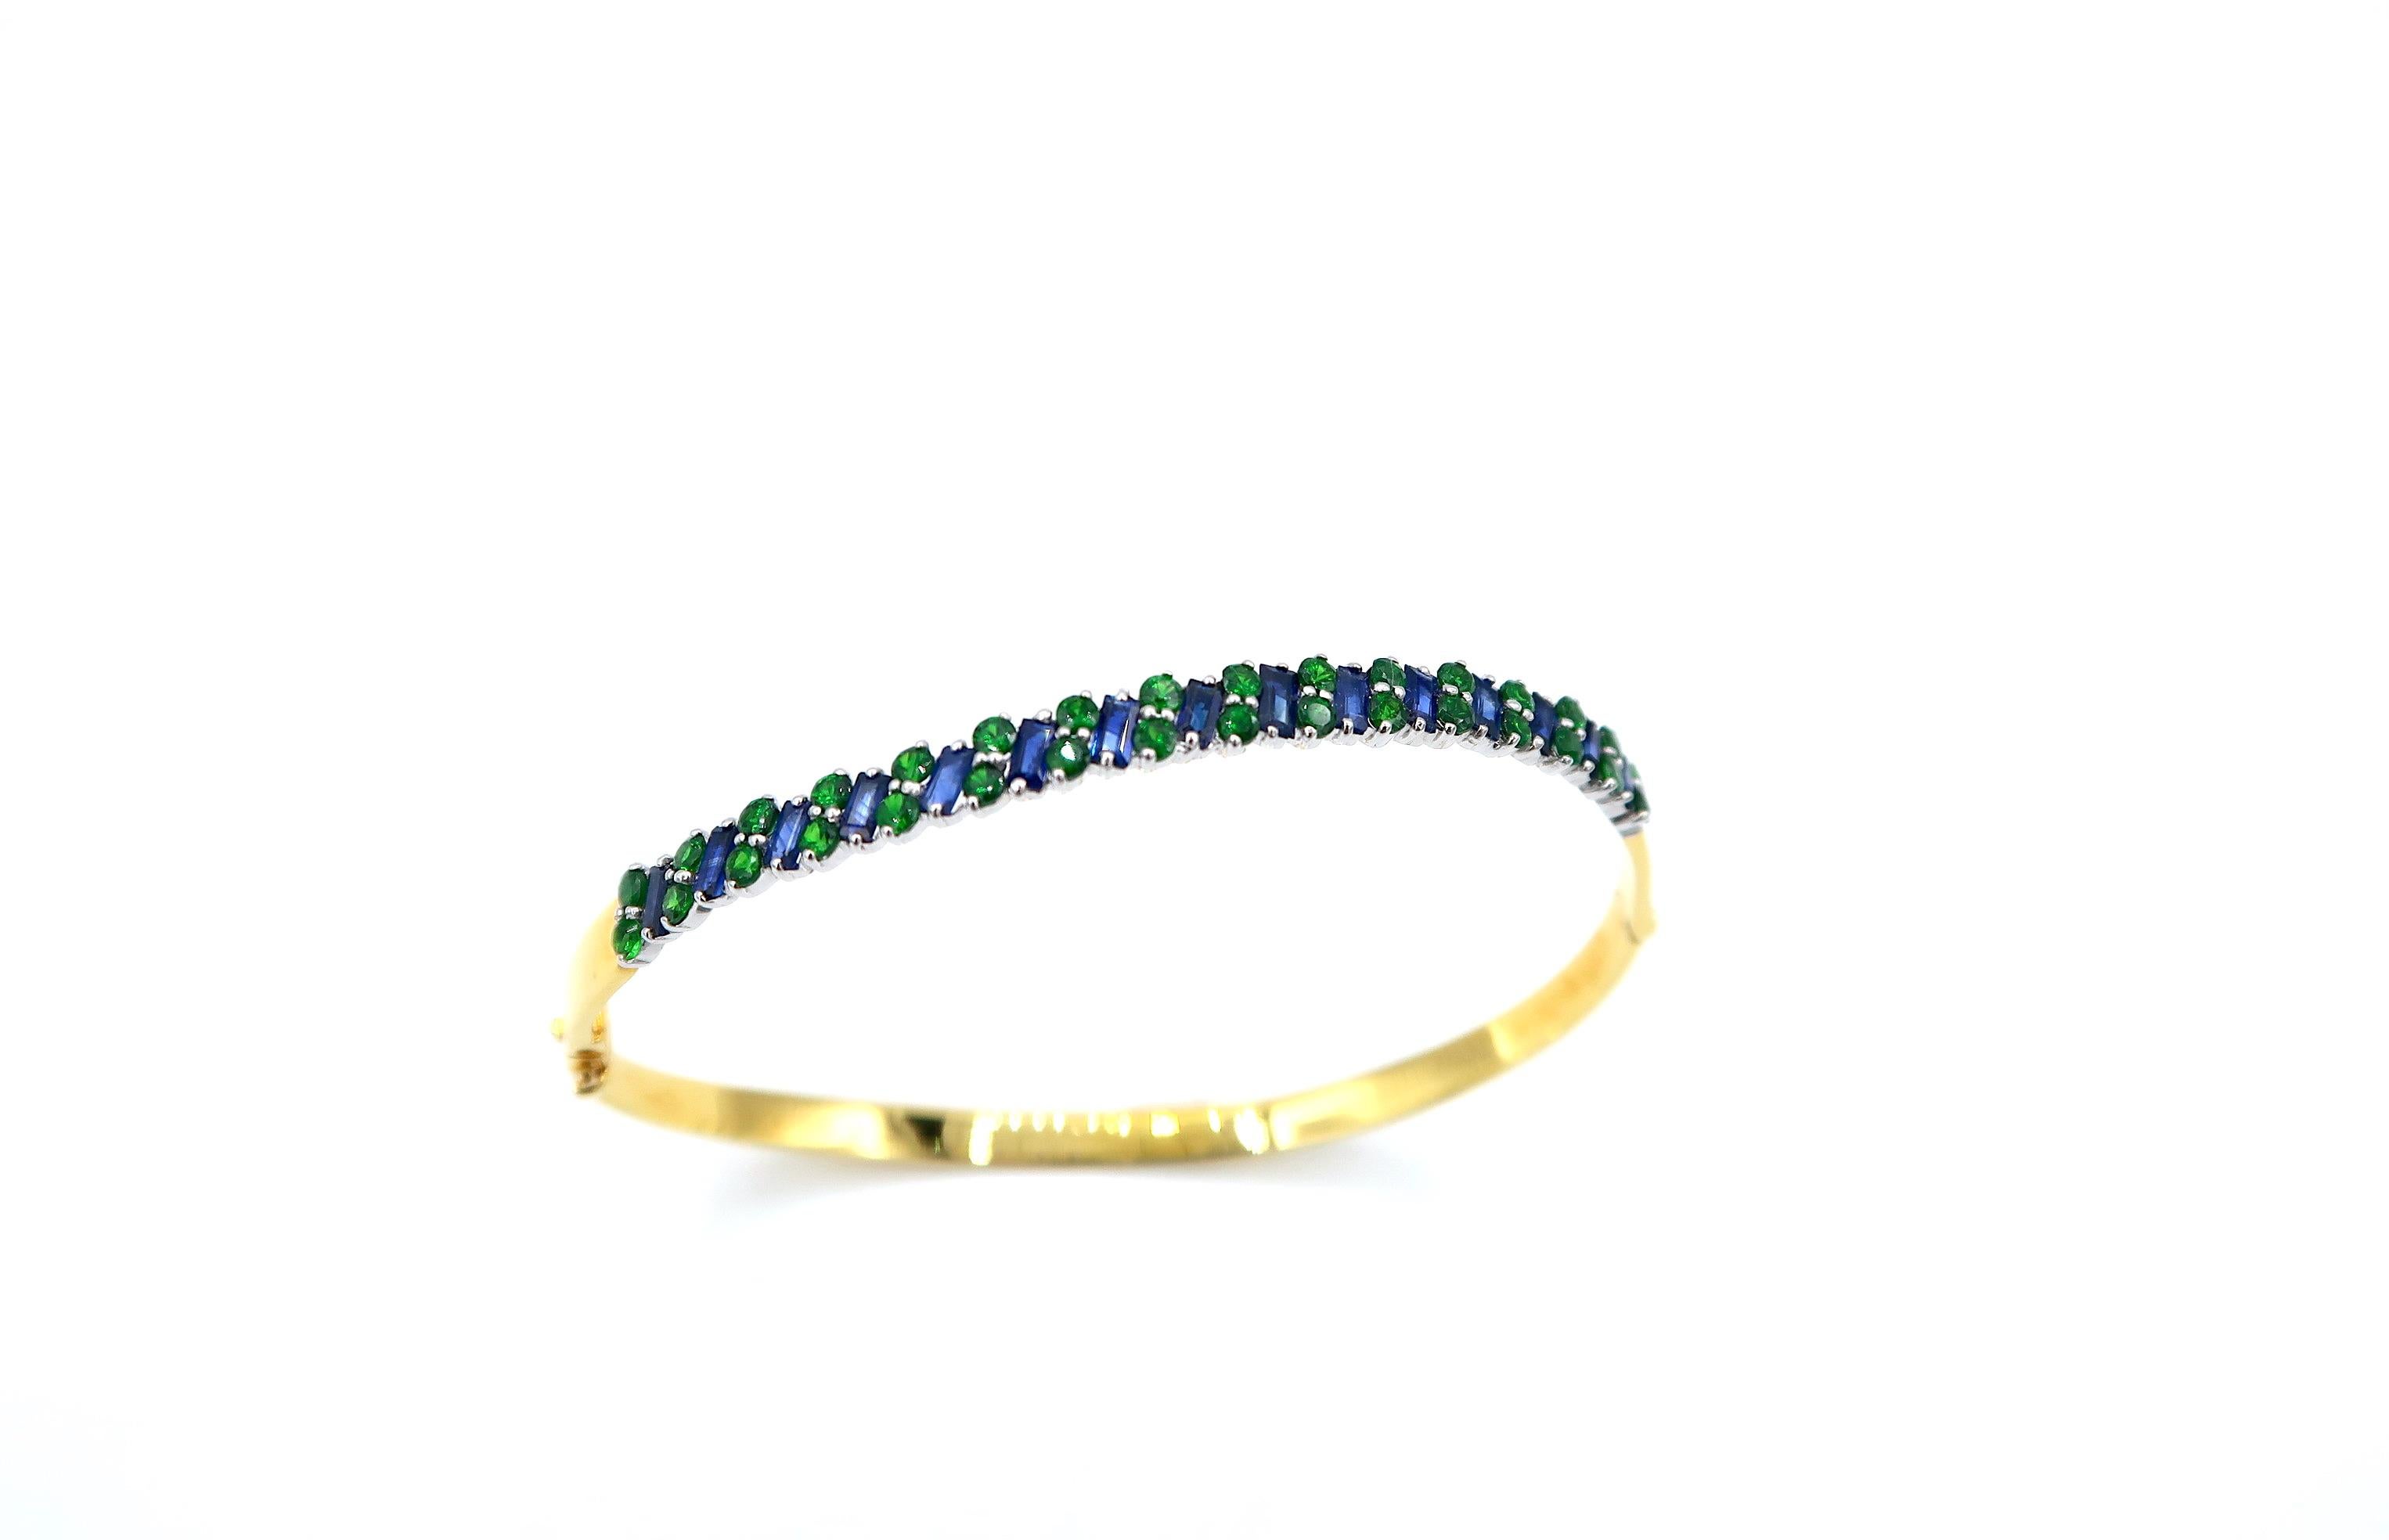 Skinny Blue Sapphire Green Tsavorite Clamper Bangle in 18 Karat Yellow Gold and White Gold

Gold: 18K 14.08g.
Sapphire: 2.29cts.
Tsavorite: 1.47ct.